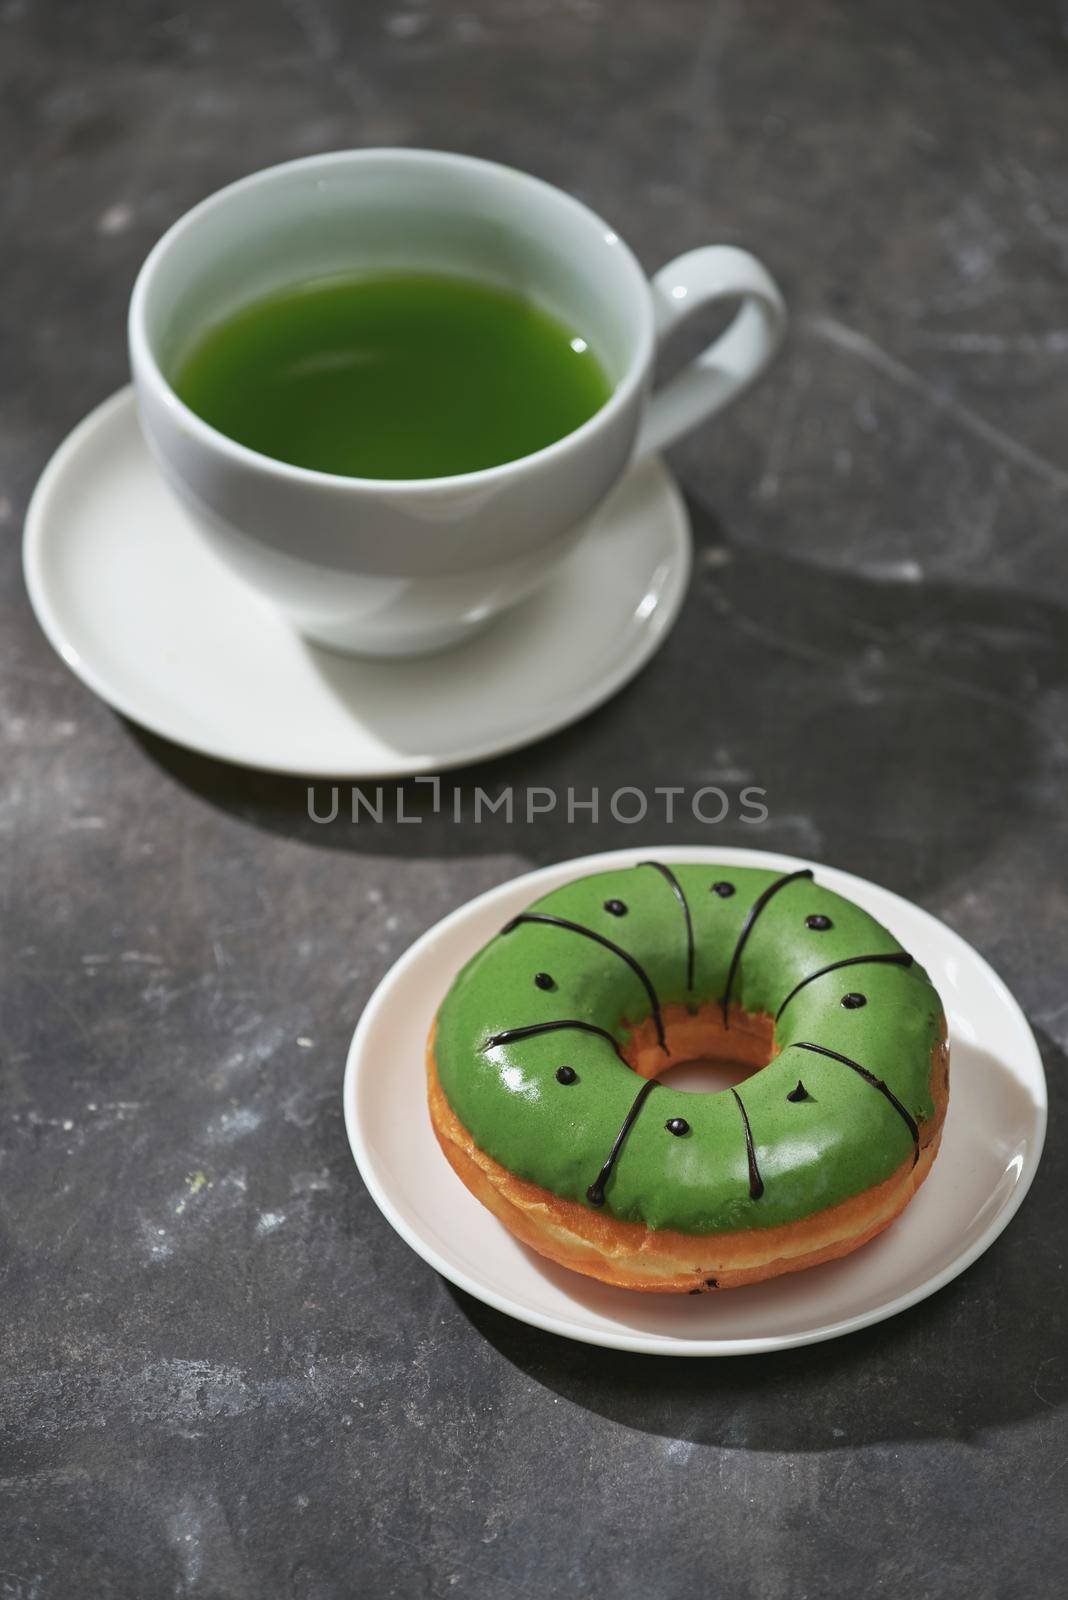 Matcha and white chocolate donuts with matcha tea latte by makidotvn